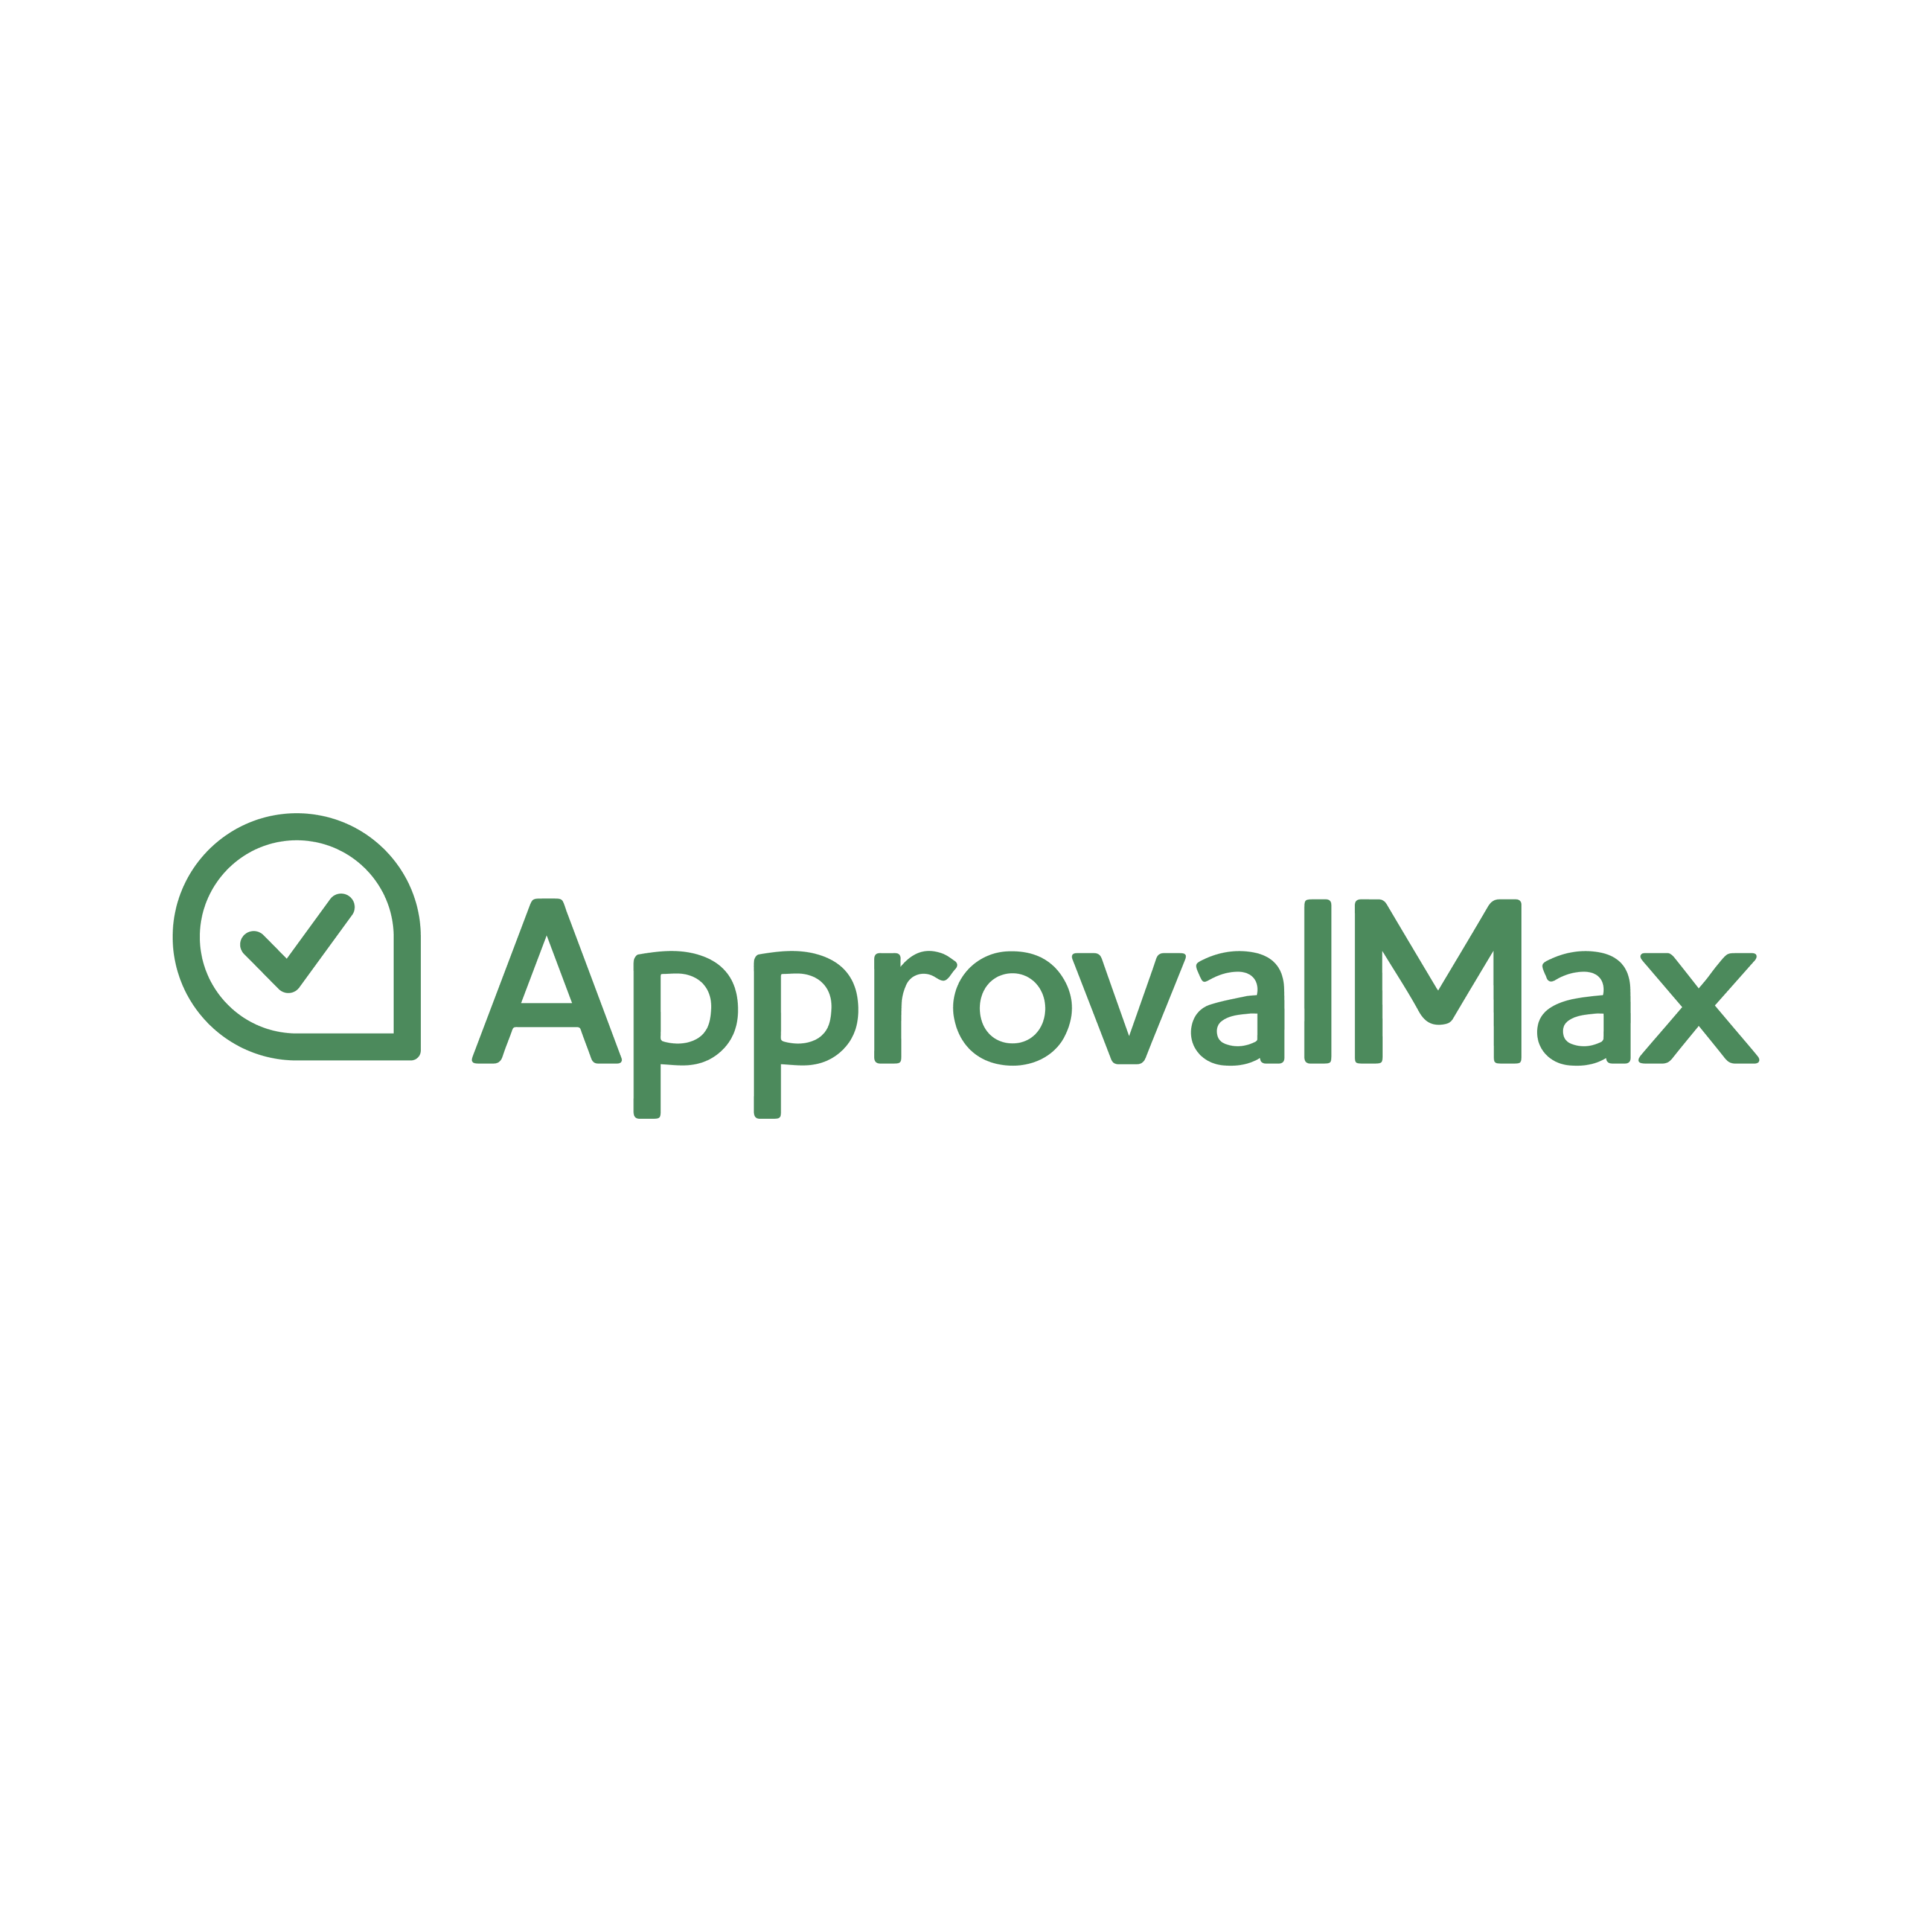 Approvalmax